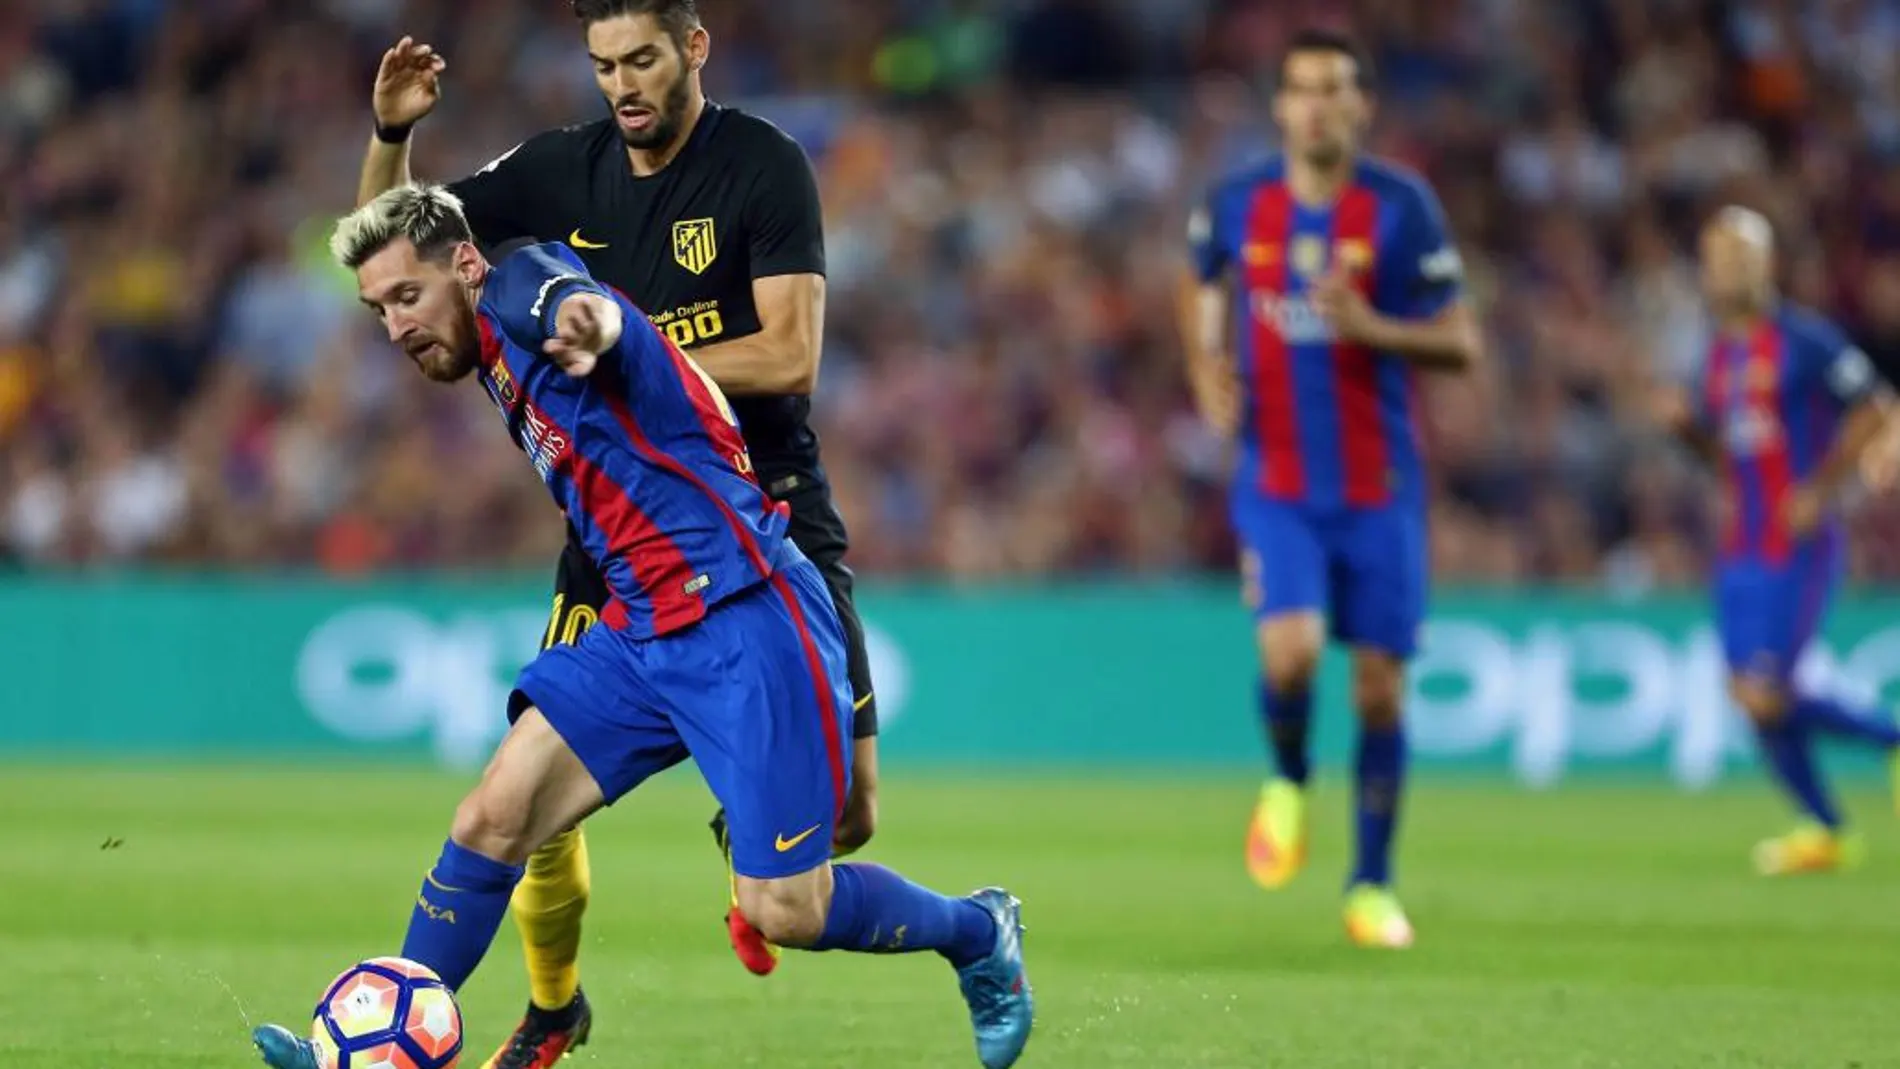 Leo Messi disputa un balón con Yannick Carrasco esta noche en el Camp Nou de Barcelona.